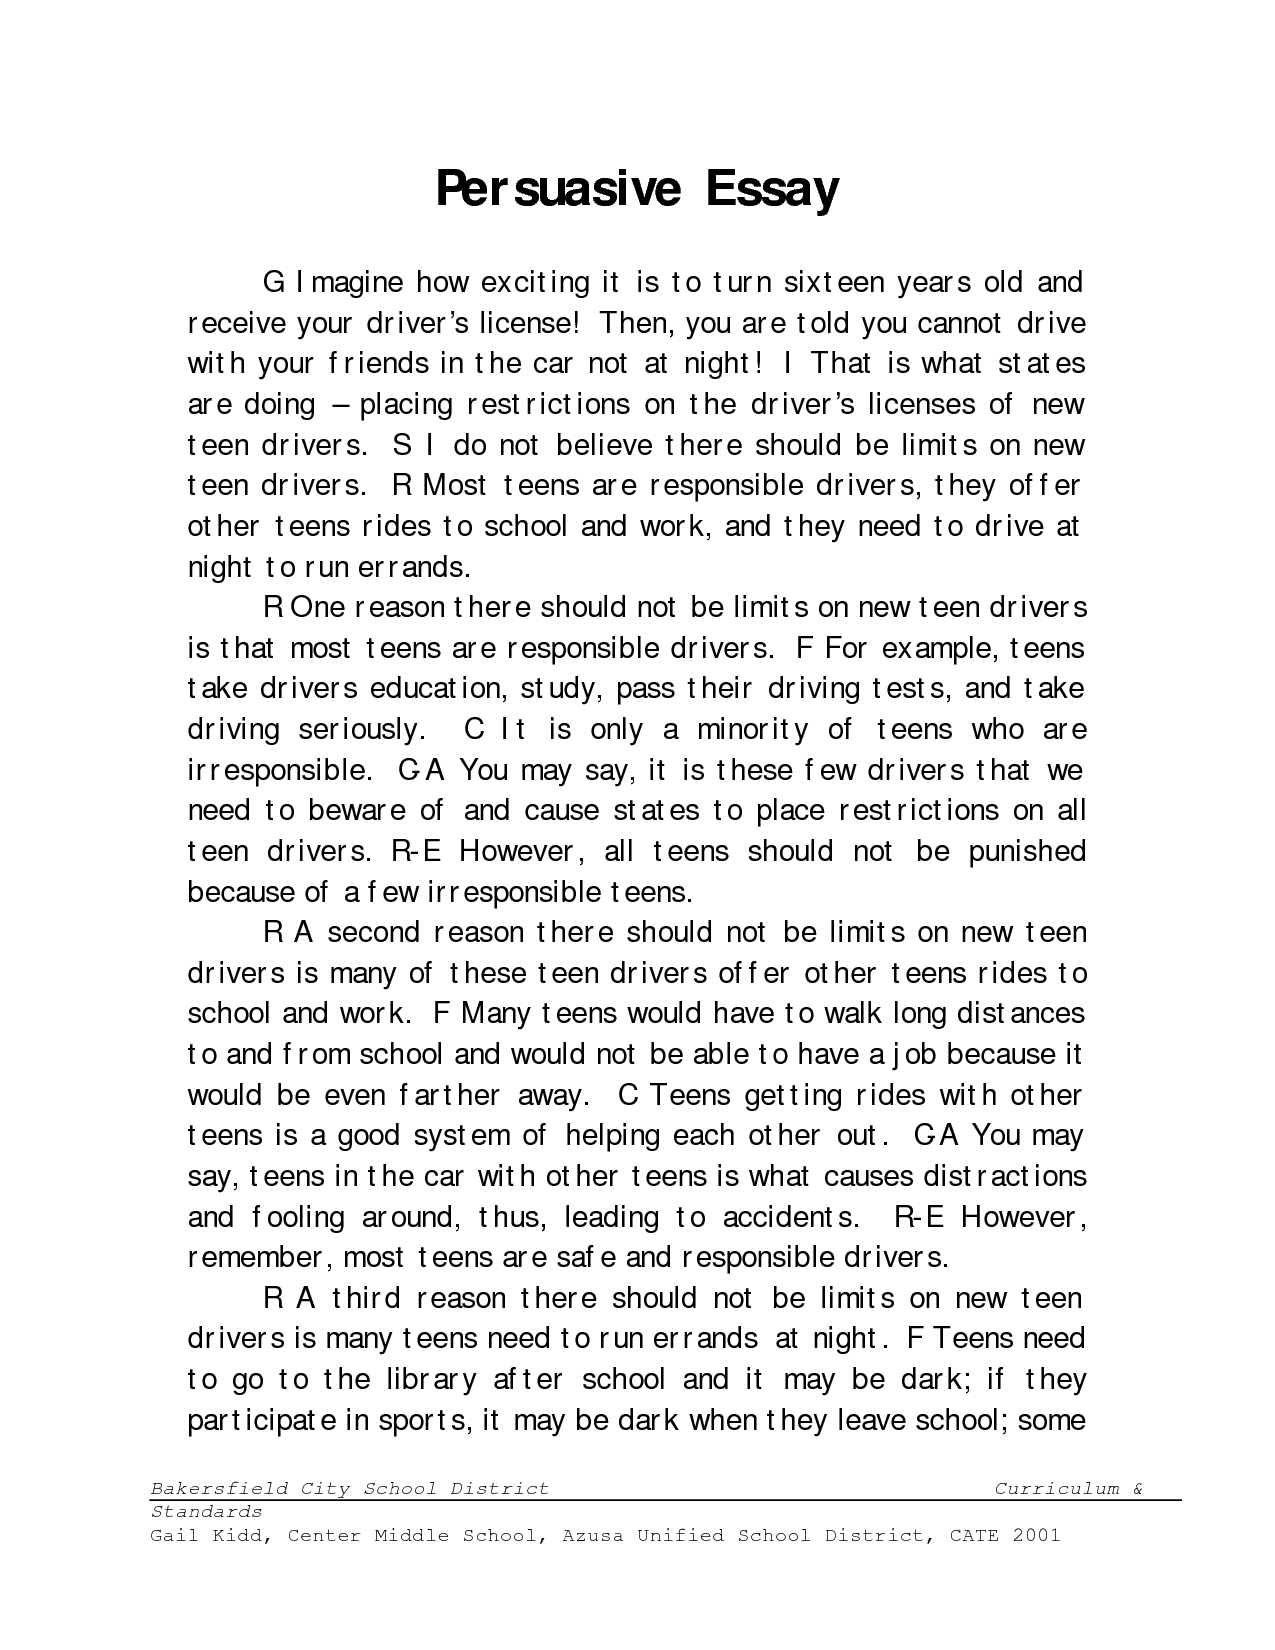 Persuasive essay for middle school